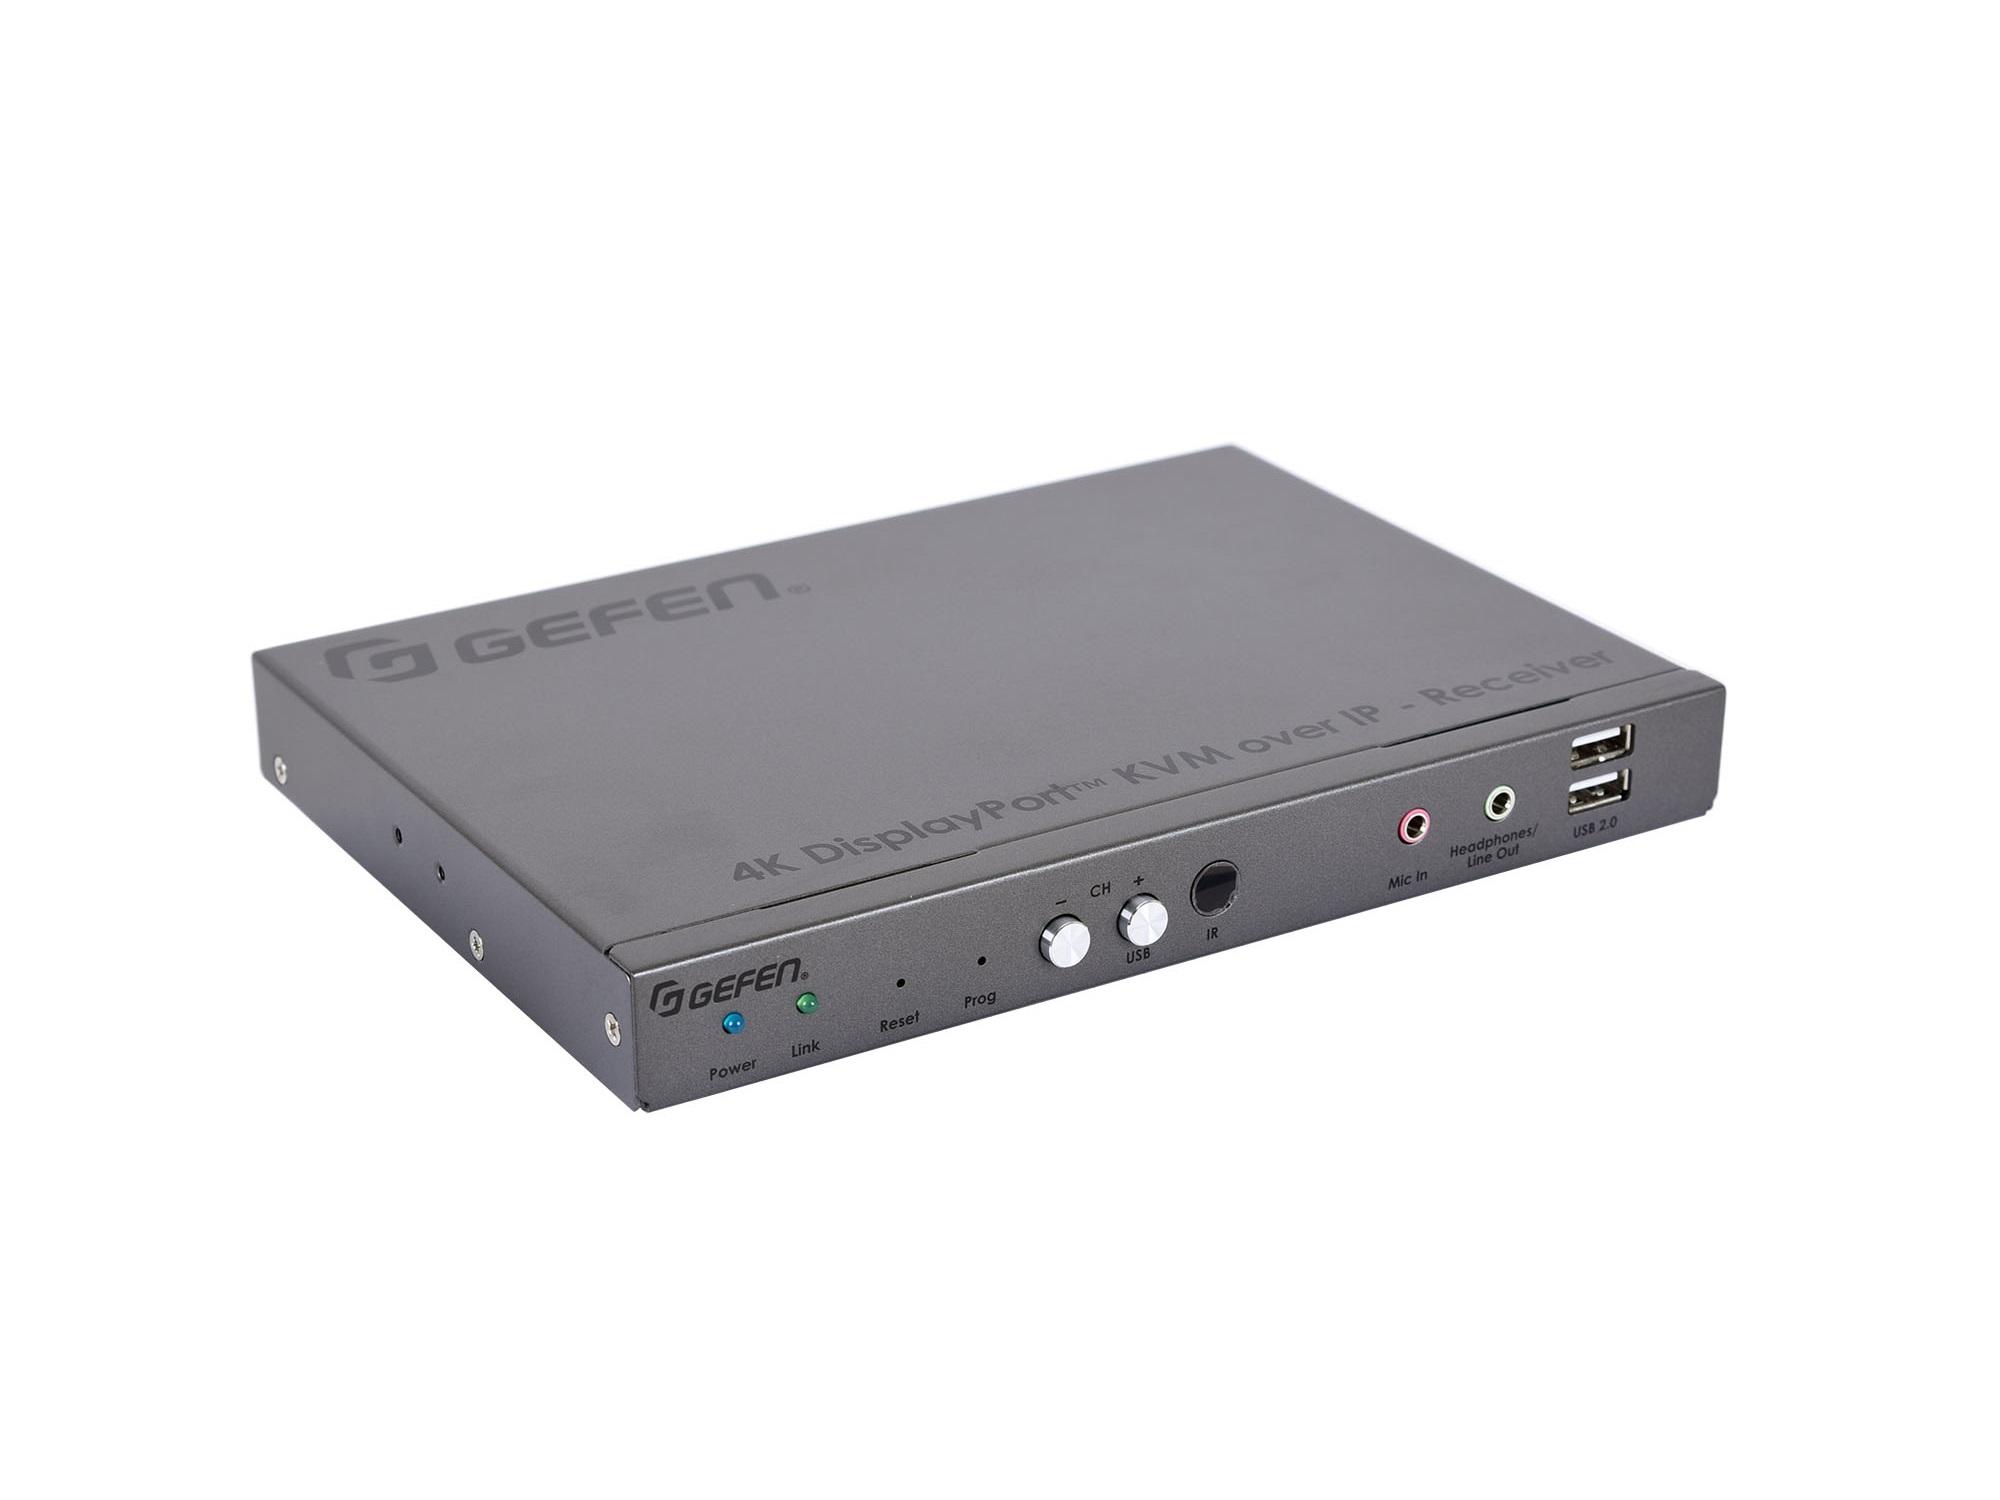 EXT-DPKA-LANS-RX 4K DisplayPort KVM over IP Extender (Receiver) with USB/Audio/RS-232/IR by Gefen